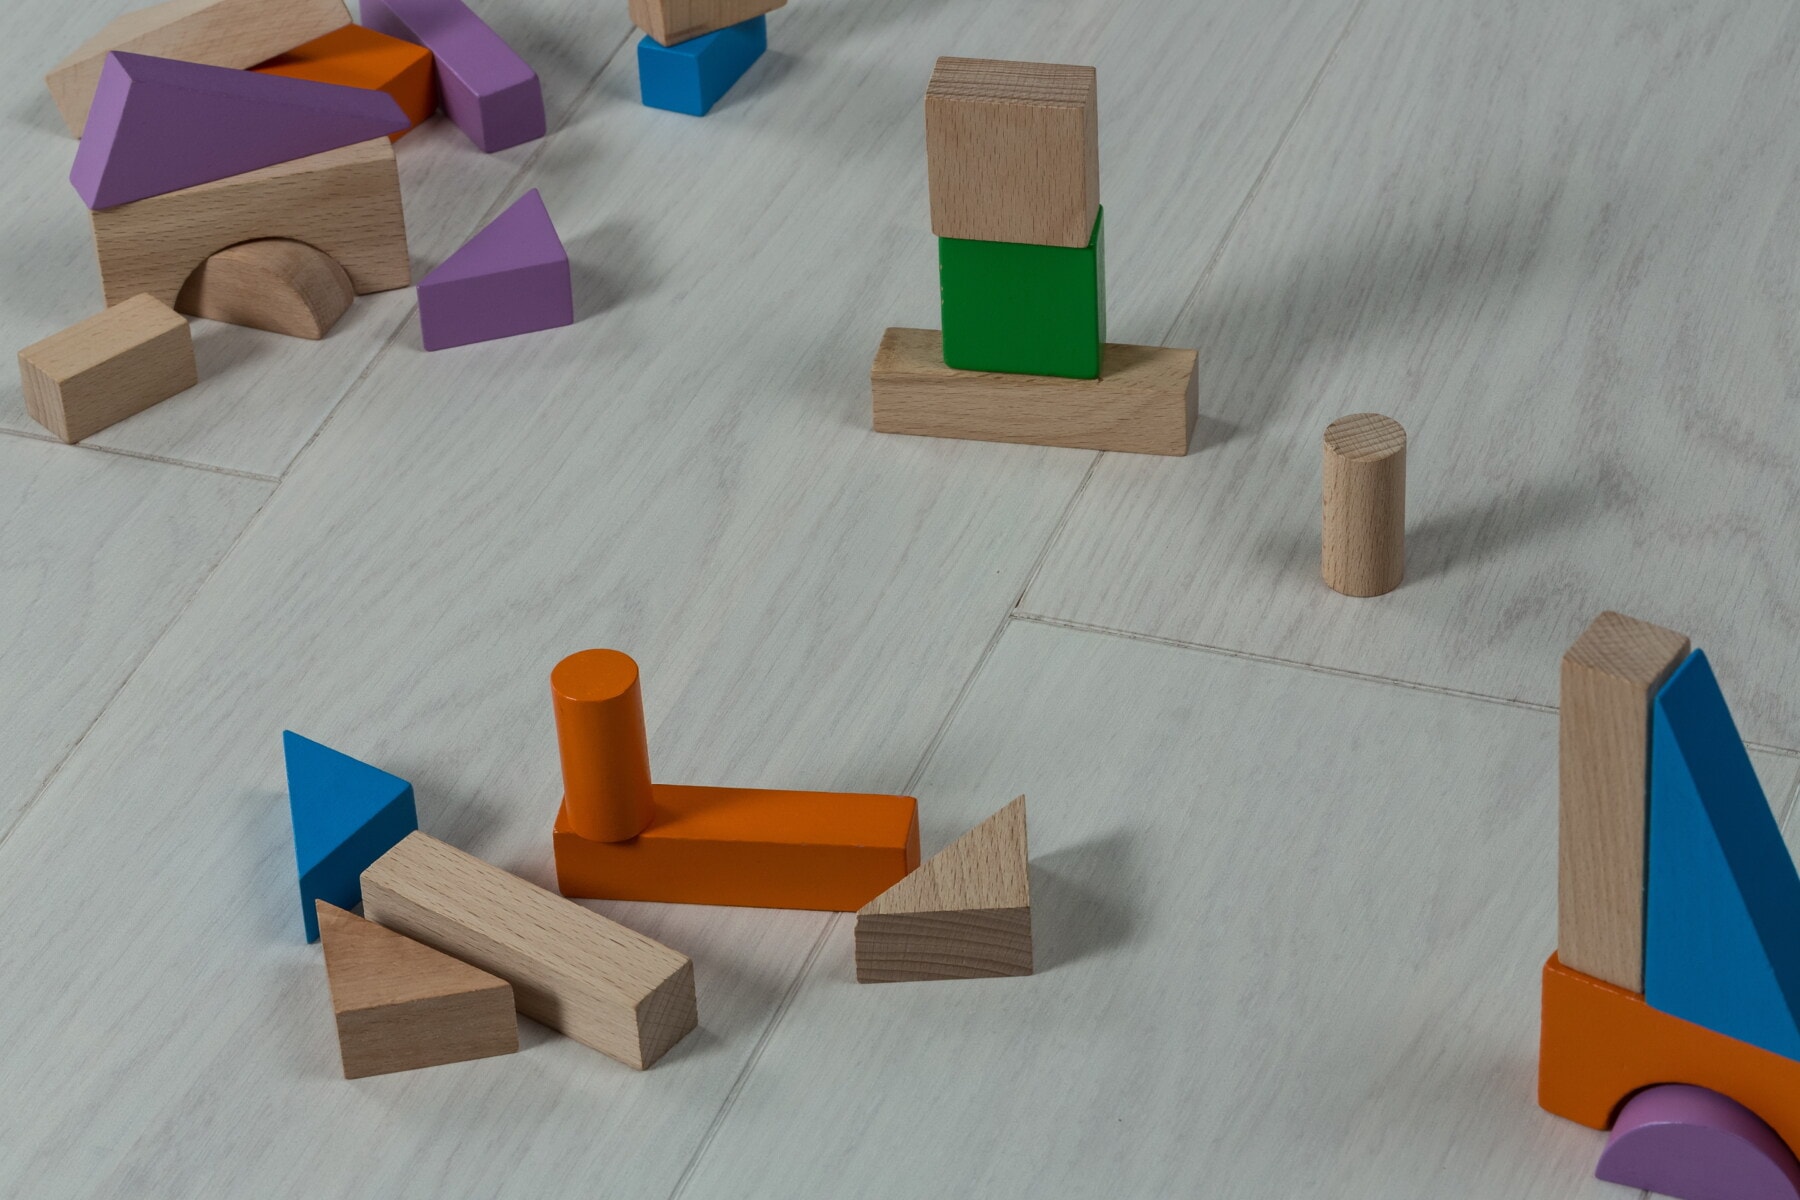 forma, juguetes, geométrica, cubo, triángulo, Plaza, madera, madera, juguete, juego